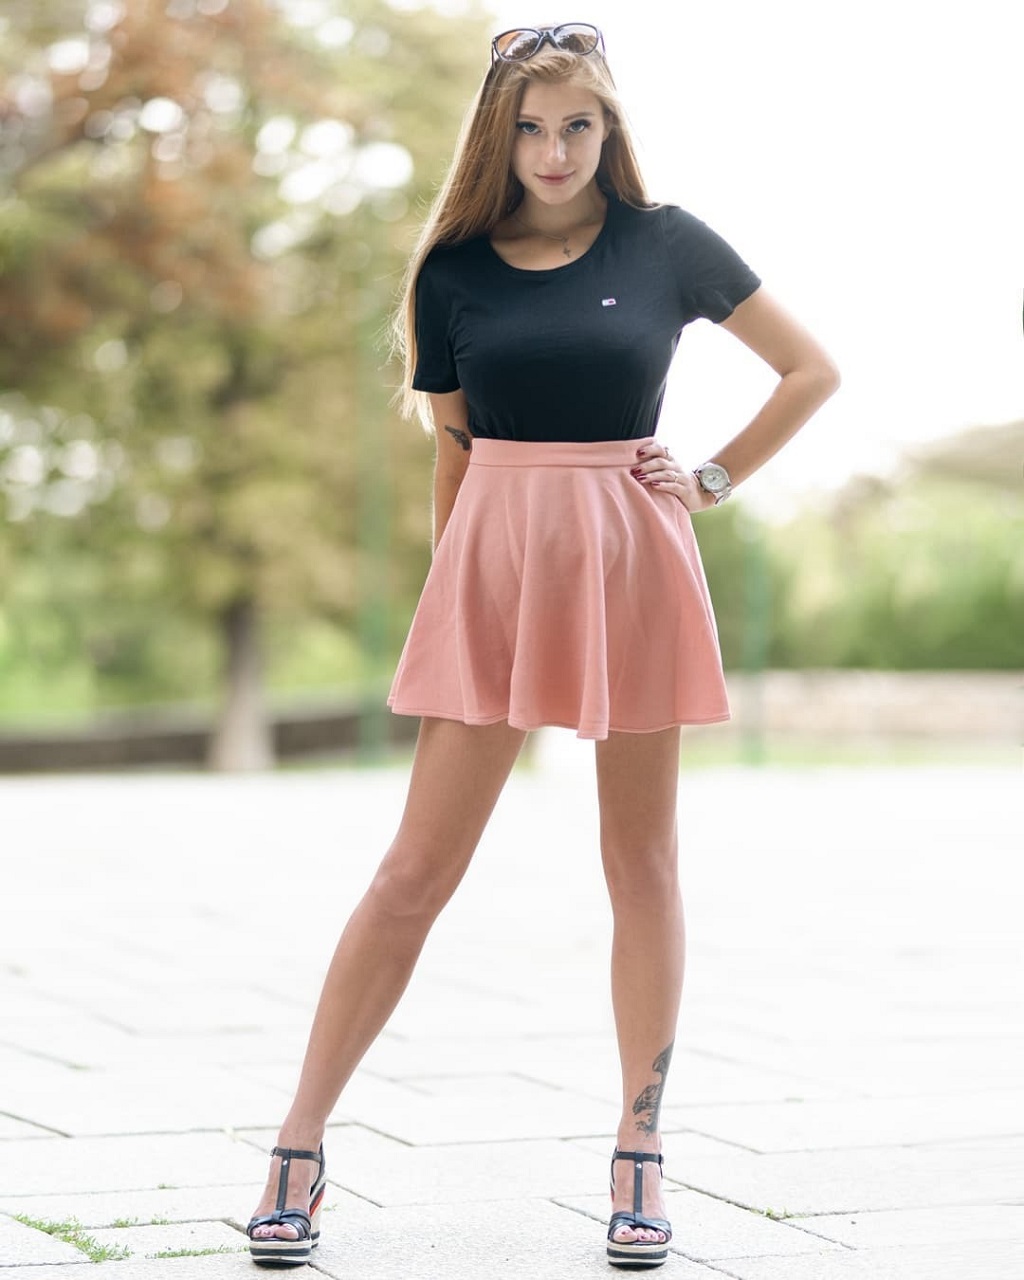 People 1024x1280 Katerina Soria model women skirt pink skirt black t-shirt women with shades portrait display wedge heels